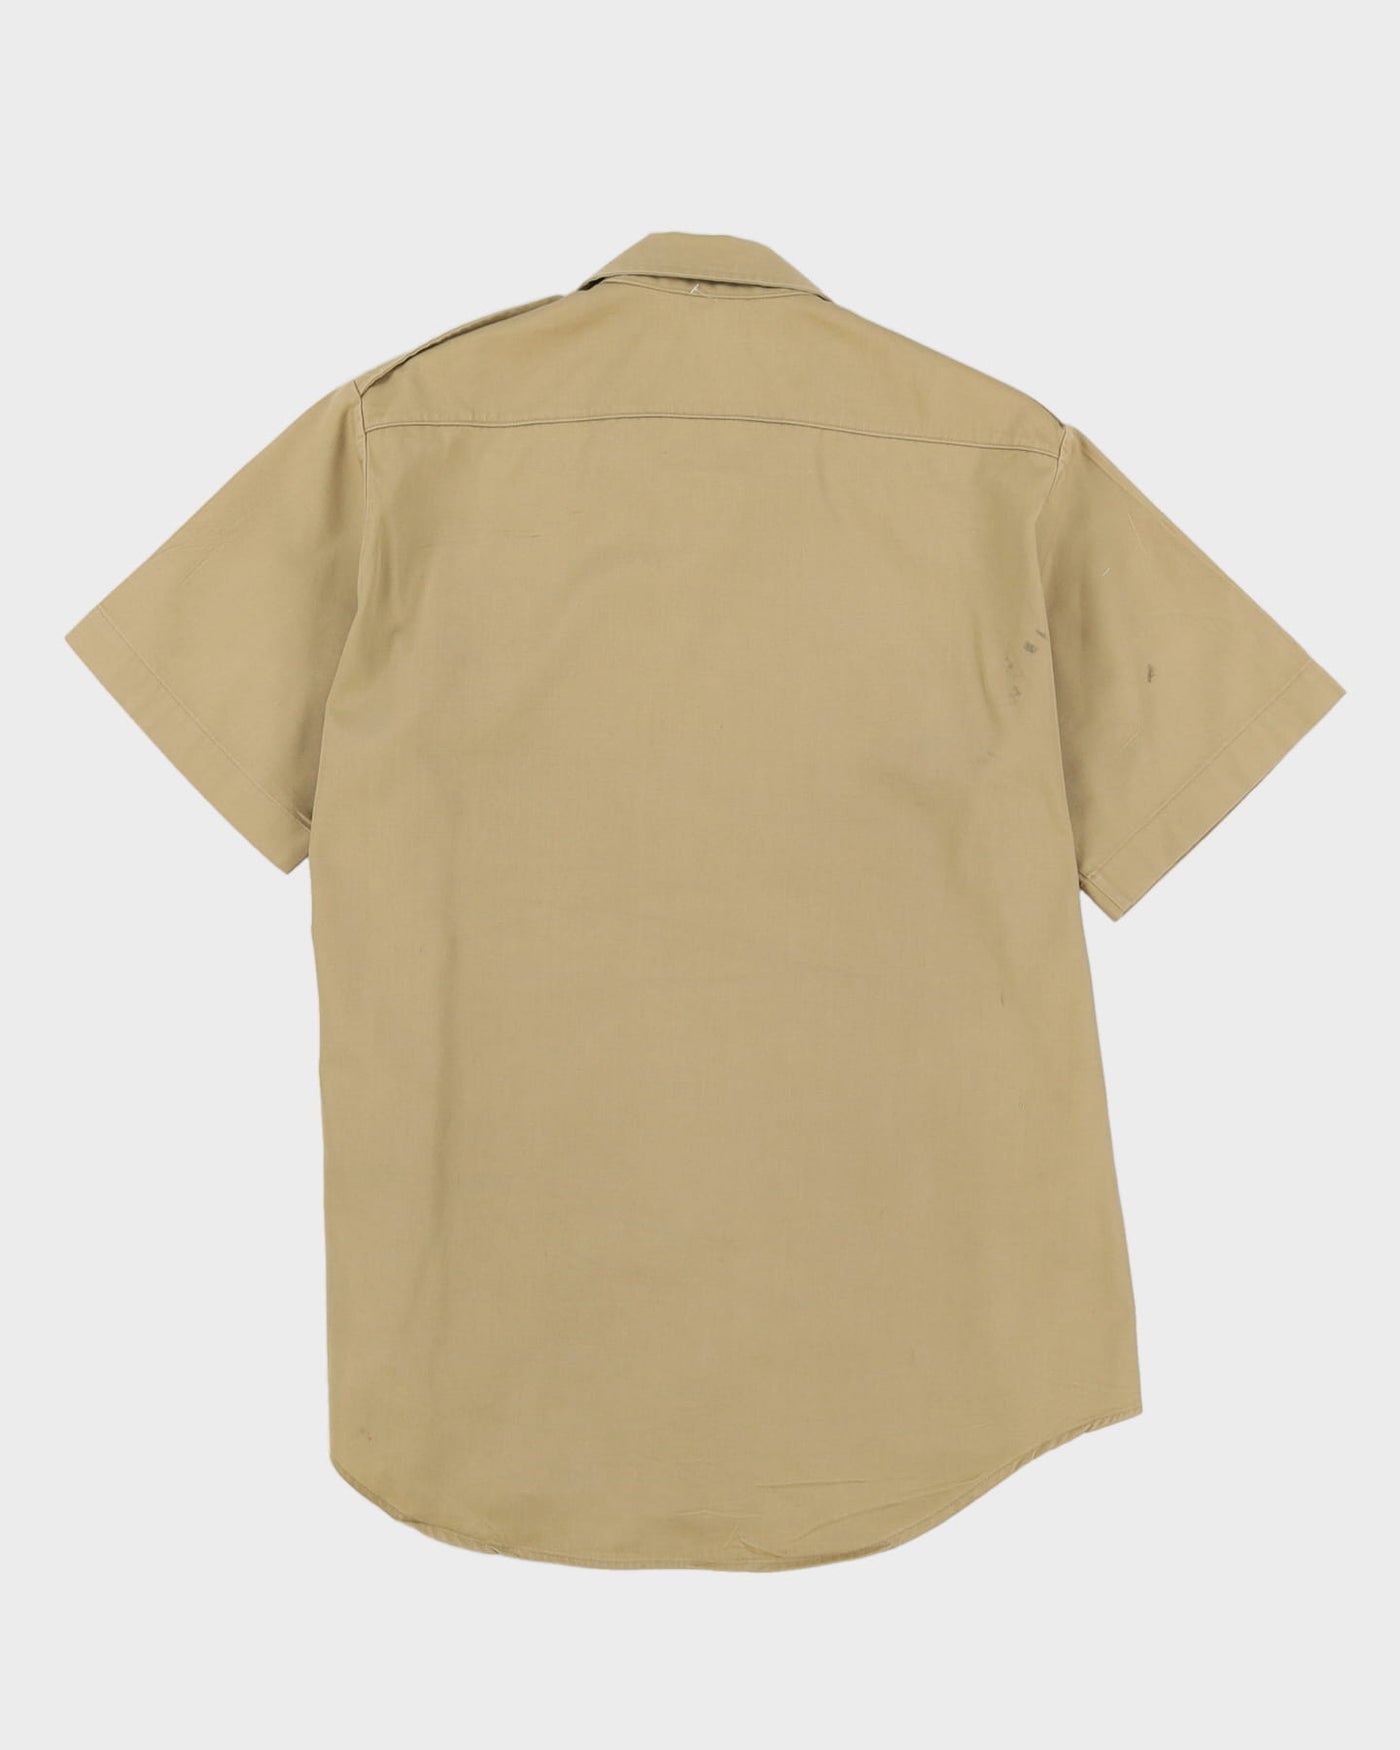 70s Vintage US Army Khaki Class B Dress Shirt - Medium